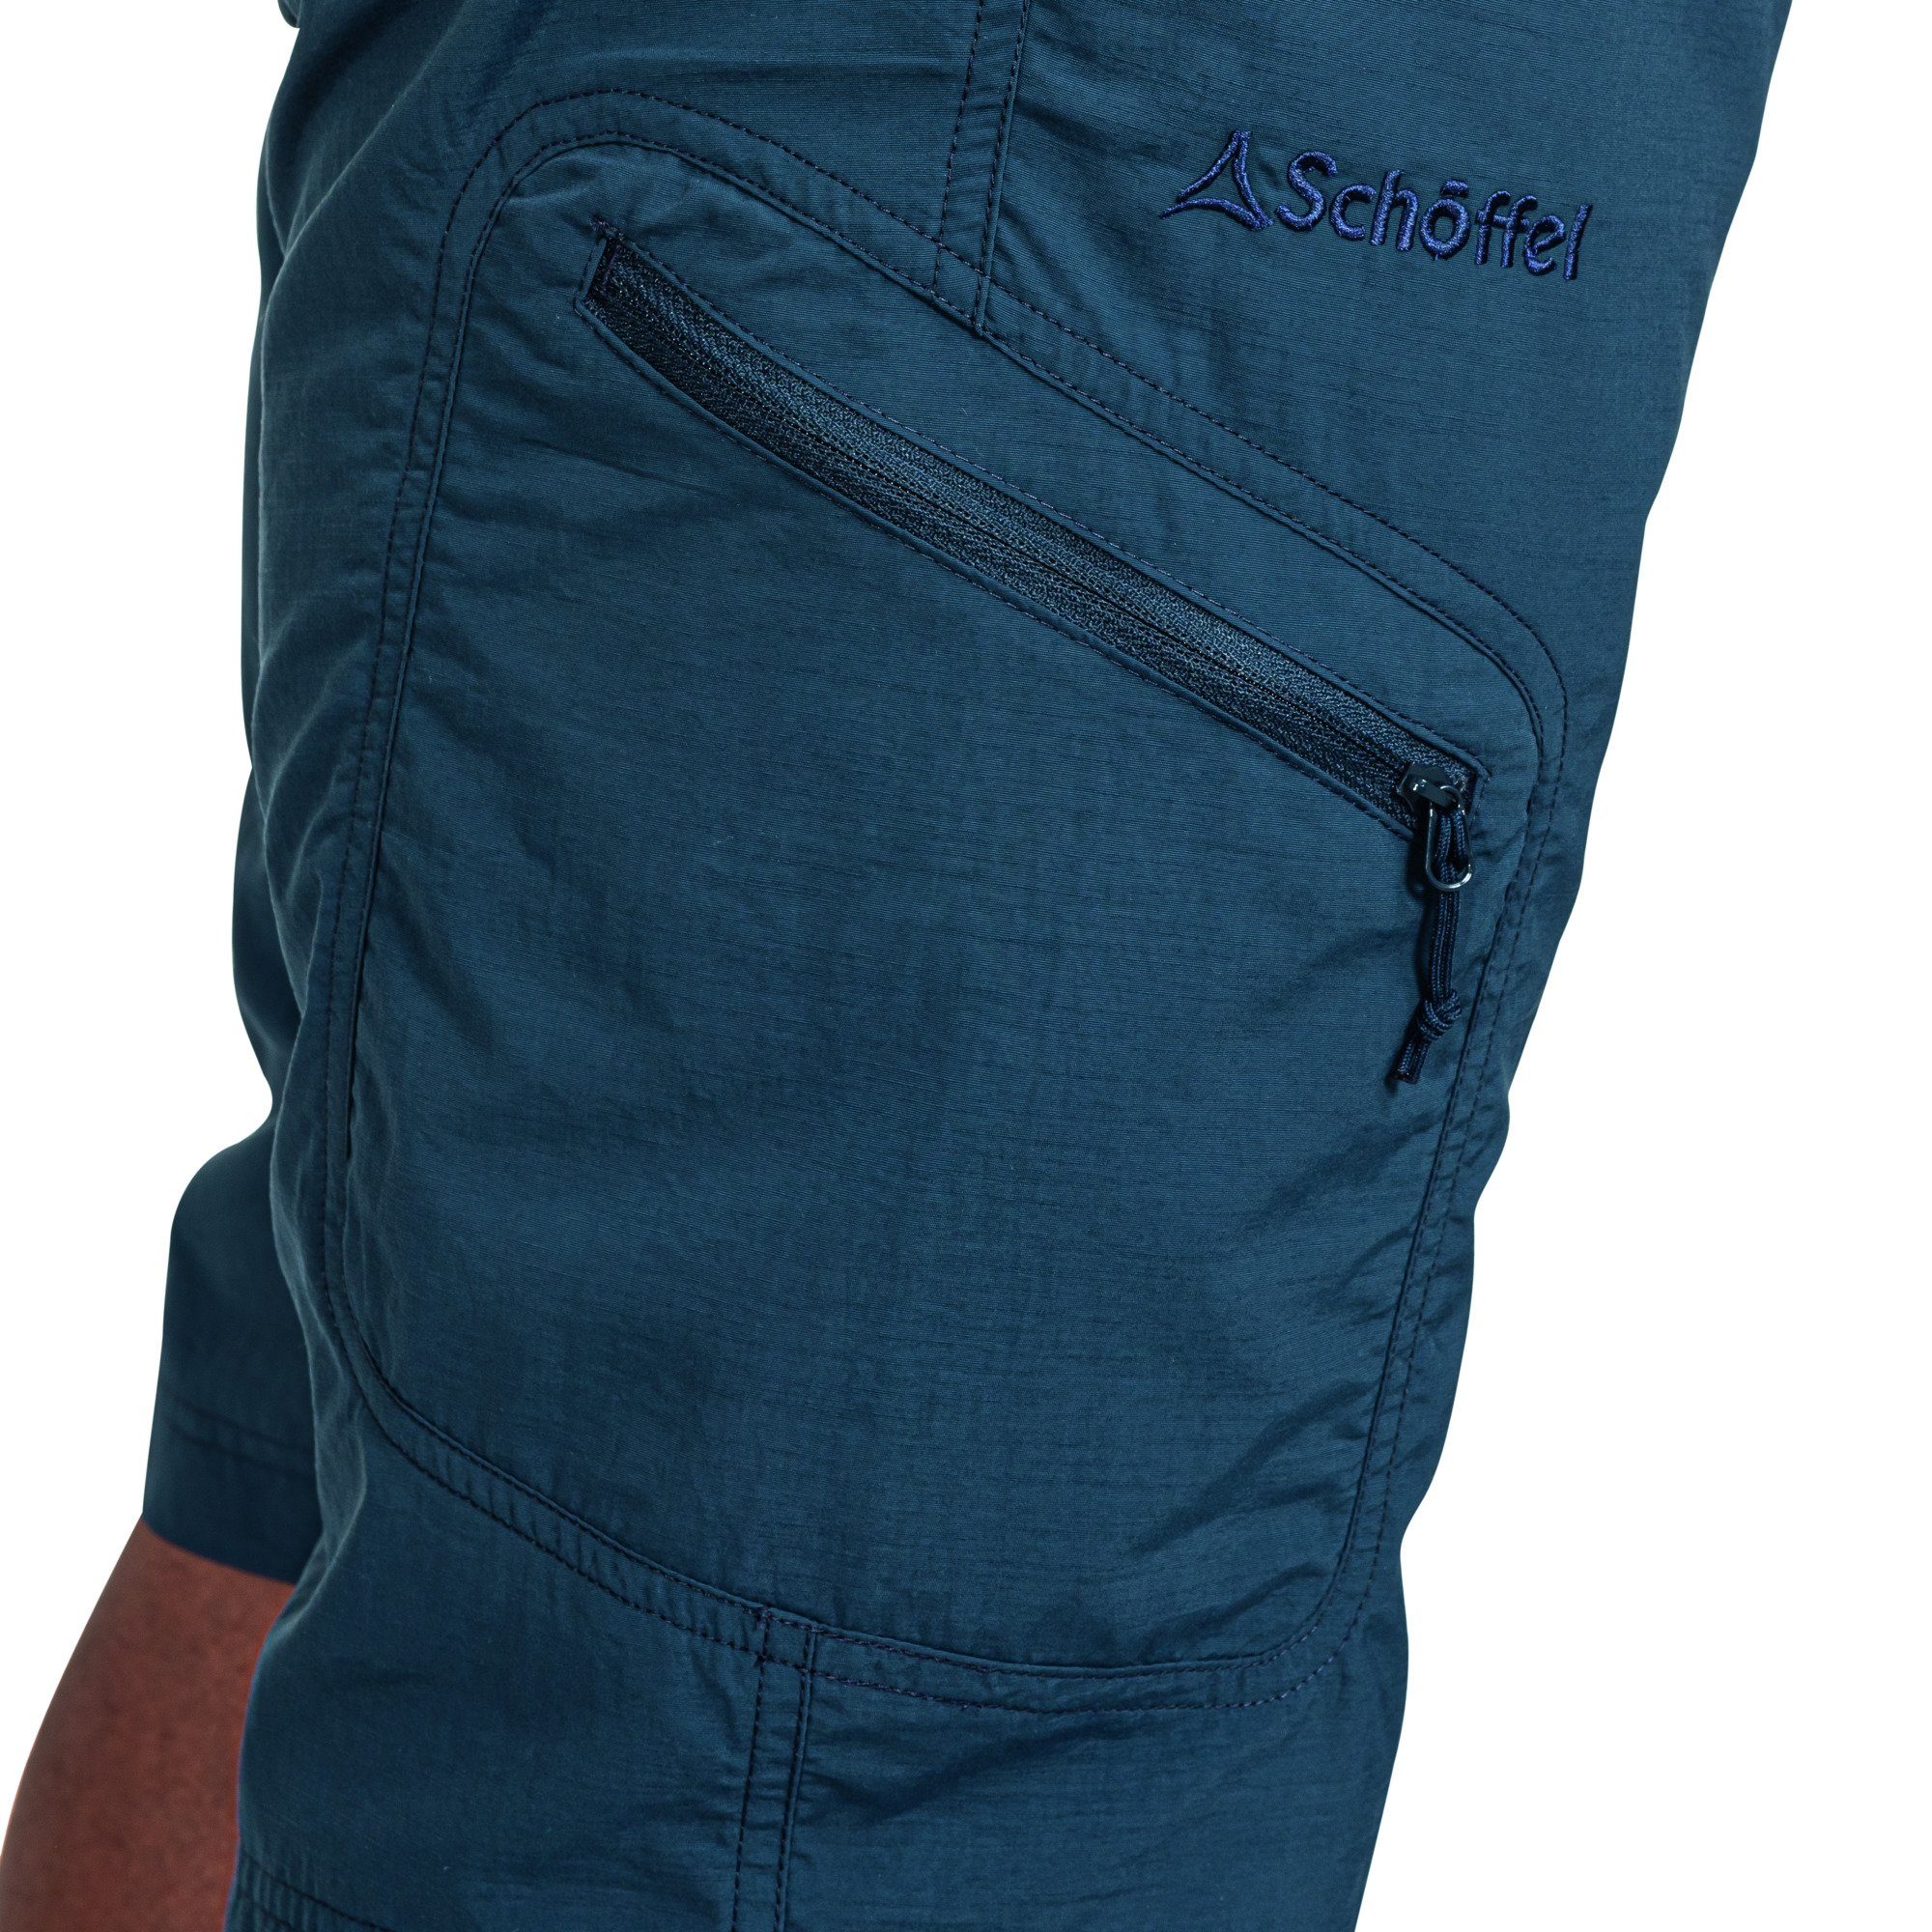 Schöffel Silvaplana2 Shorts 8180 dress Country blues Schöffel Bermudas